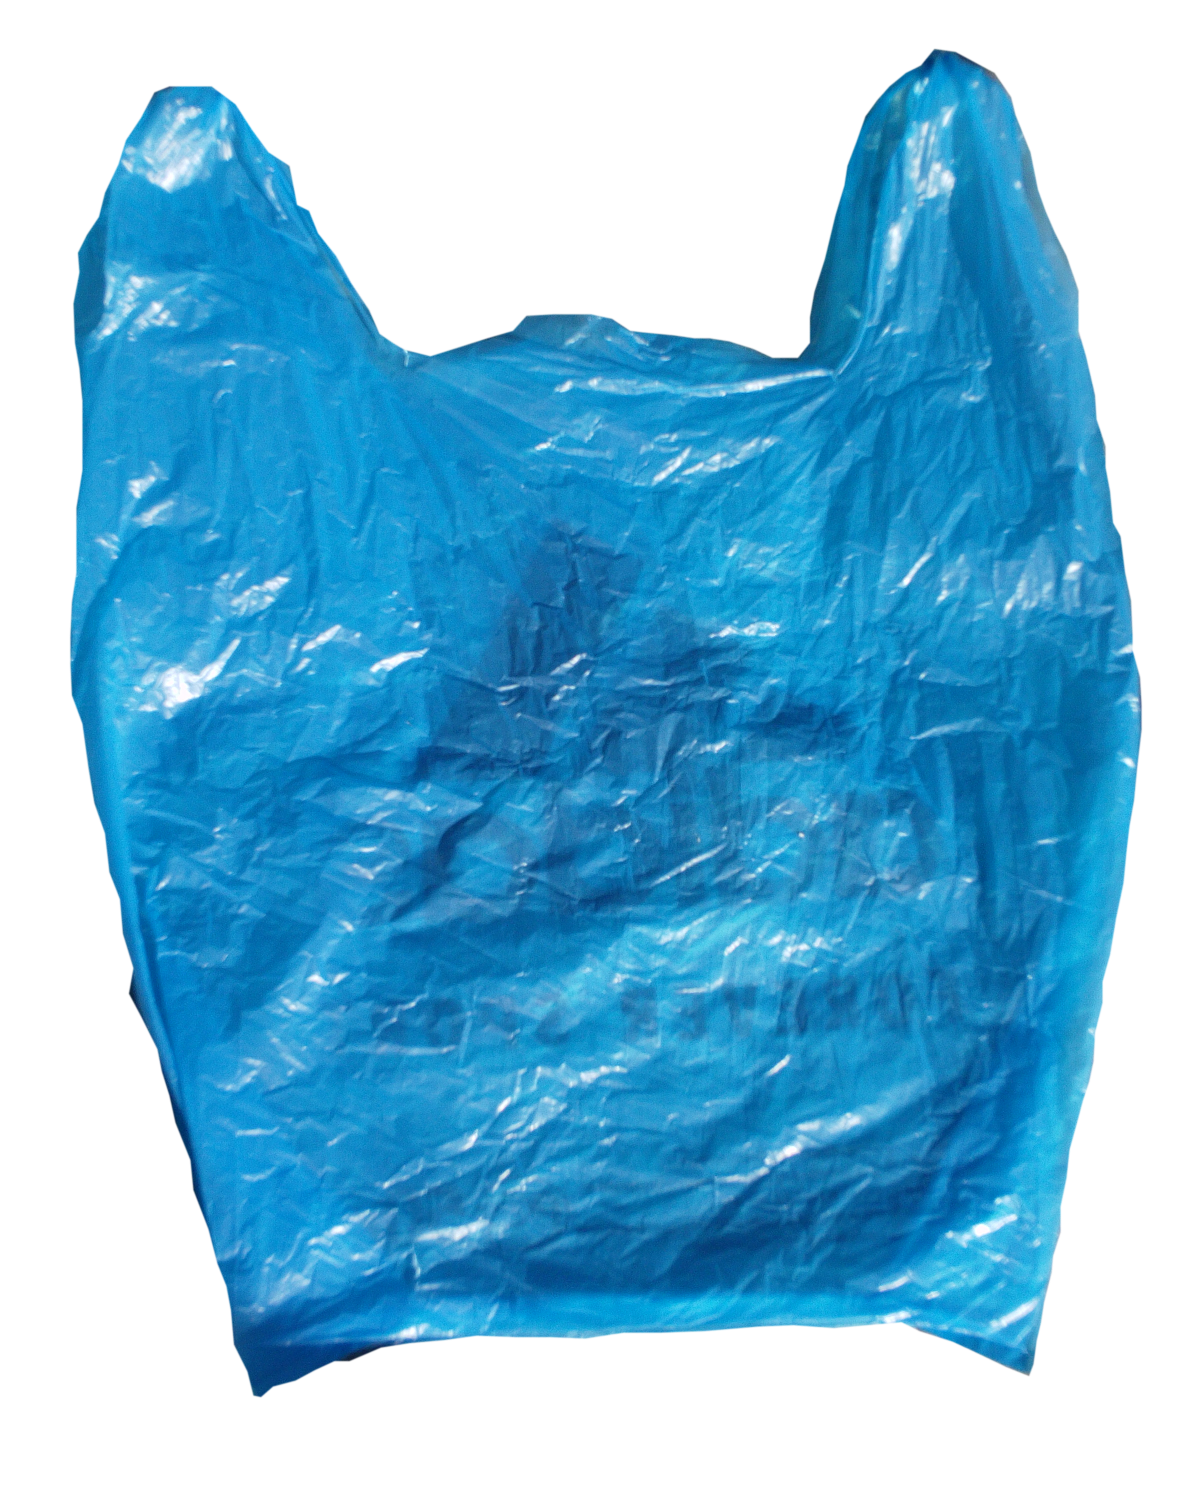 Bolsa de plástico PNG